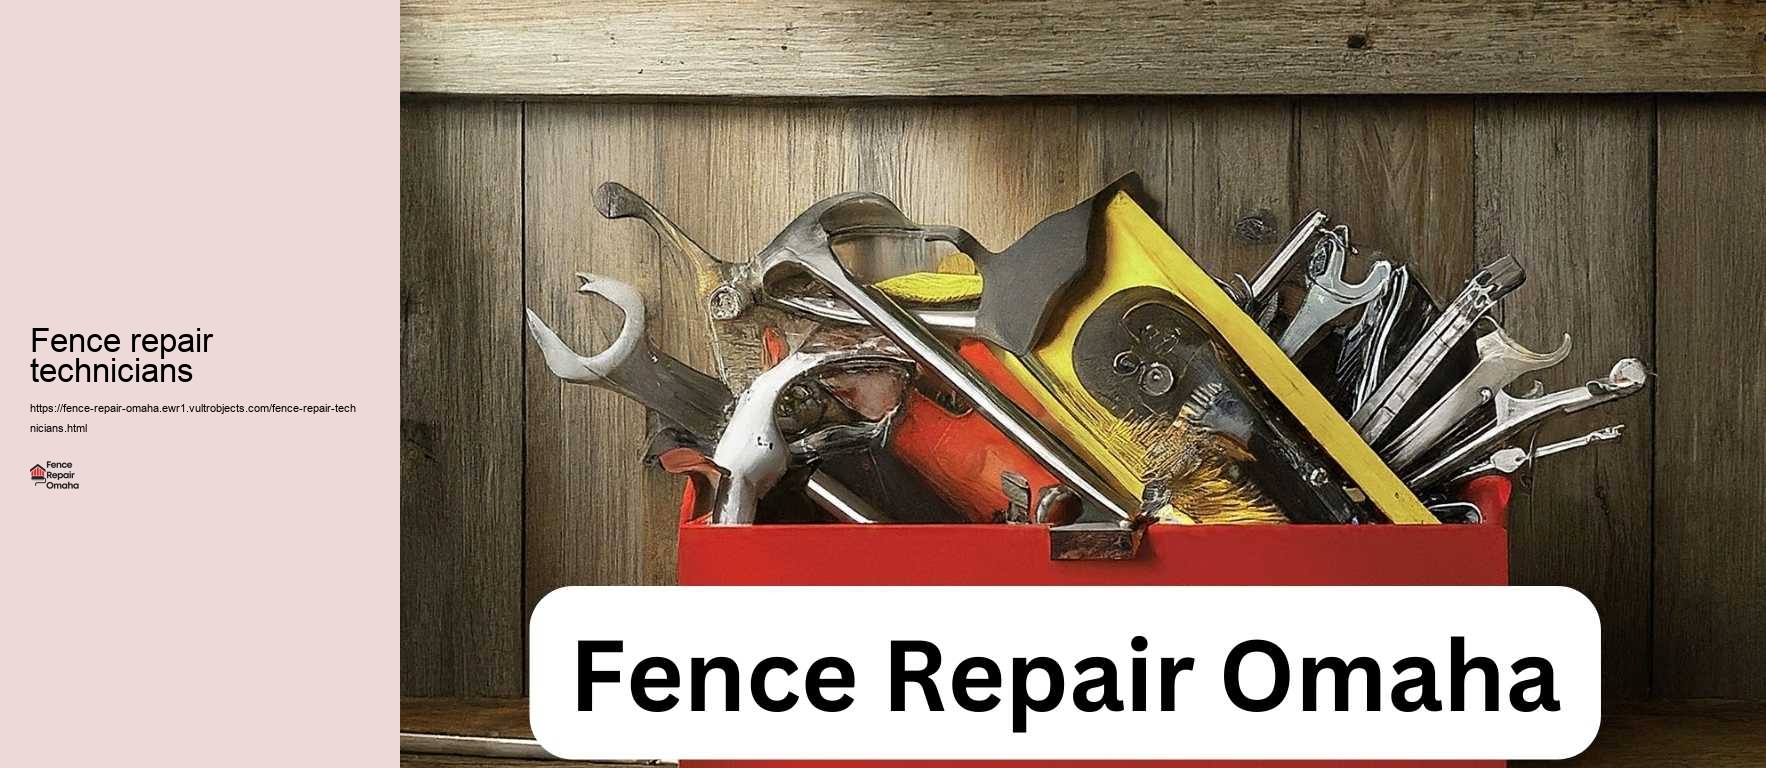 Fence repair technicians